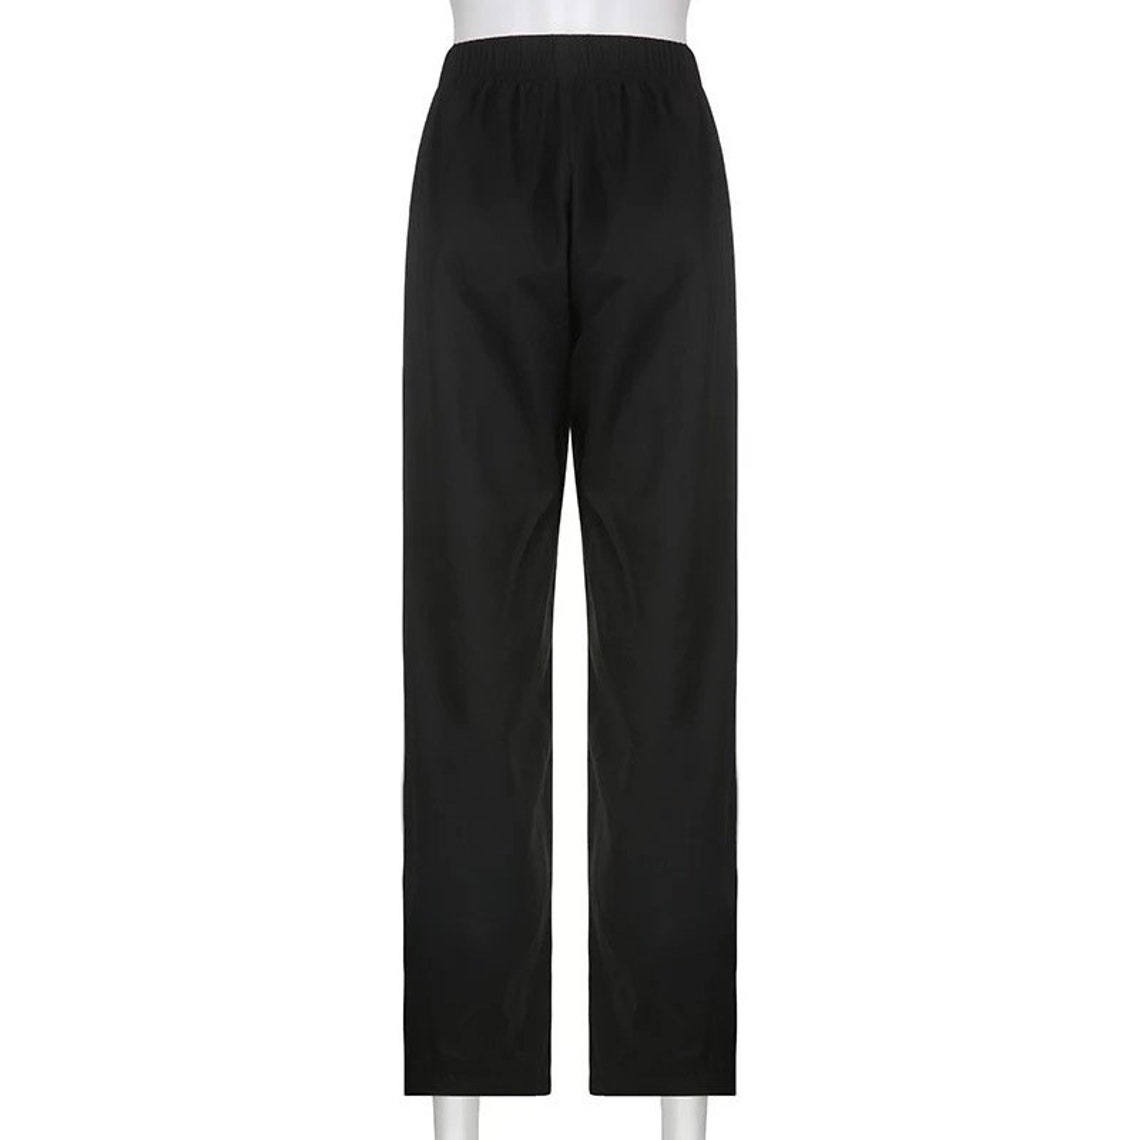 Black Side Striped Pants Baggy Track Pants Swishy Pants 90s - Etsy